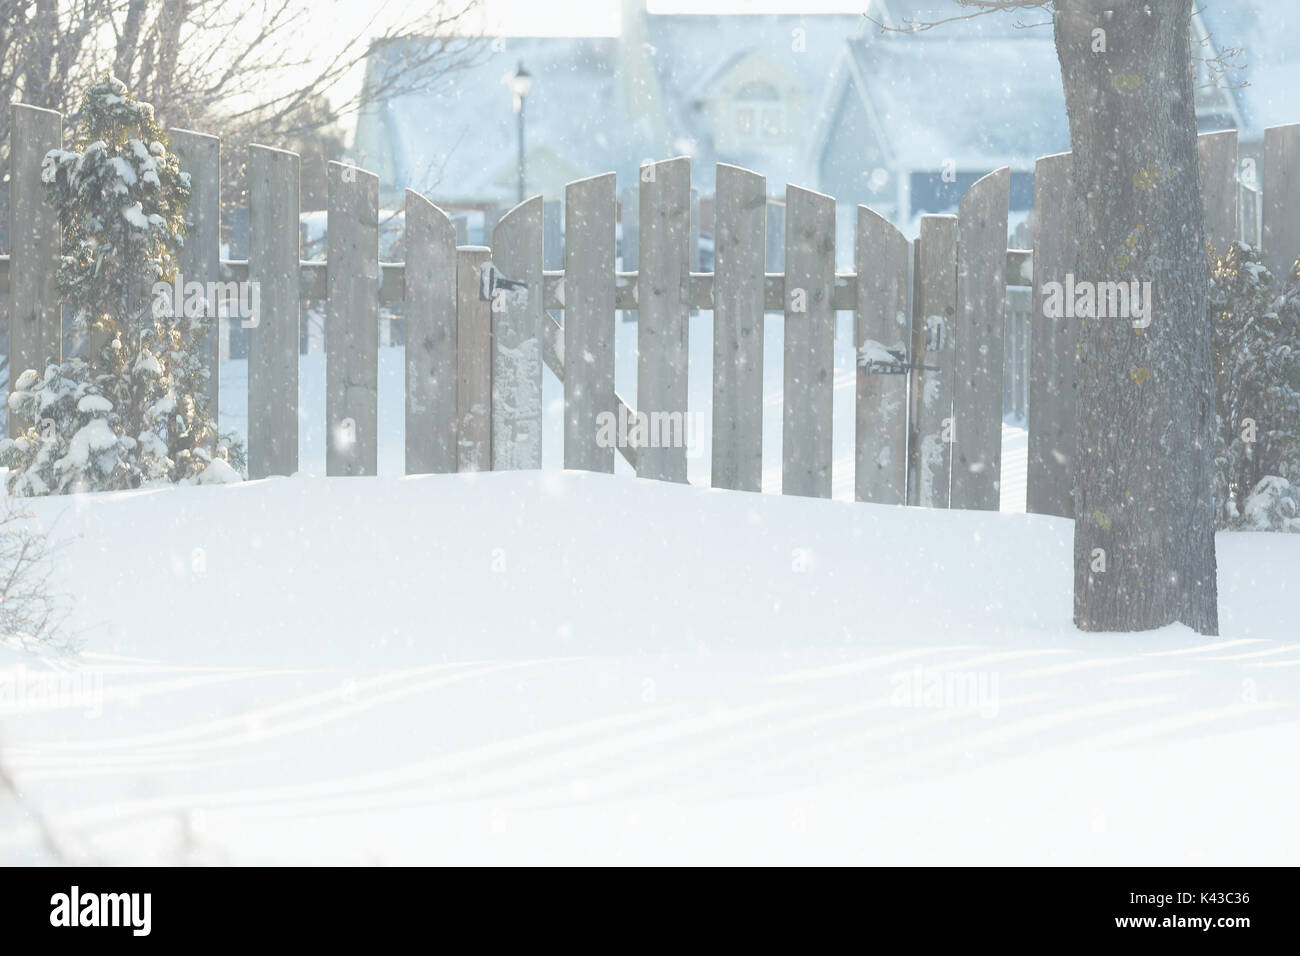 Snow falling near a garden gate in a residential neighborhood. Stock Photo